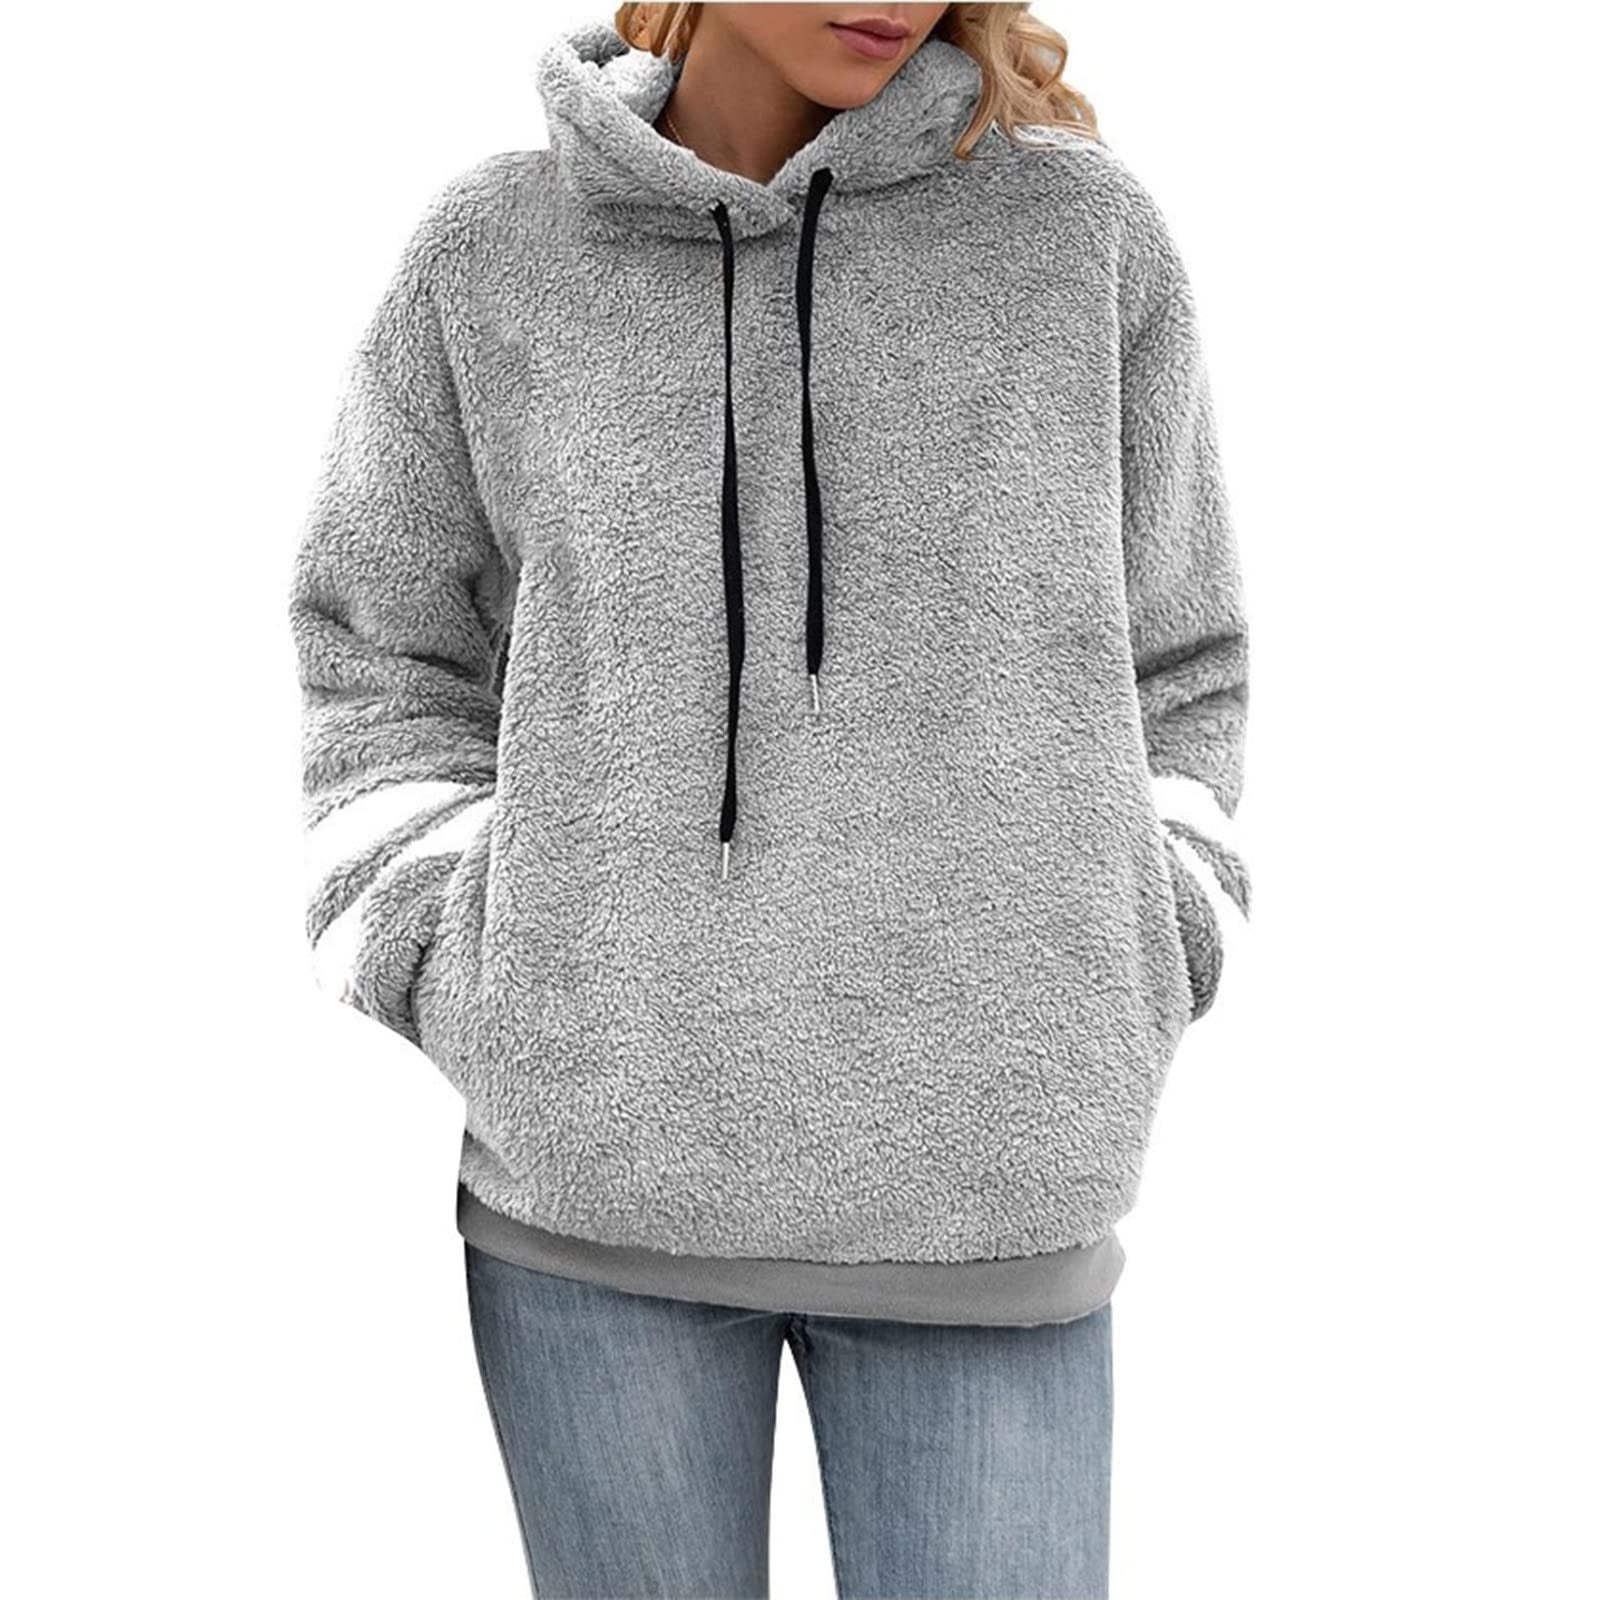 XFLWAM Women's Fuzzy Fleece Hoodies Pullover Hoodie Athletic Cozy Oversized  Pockets Hooded Sweatshirt Coffee S 